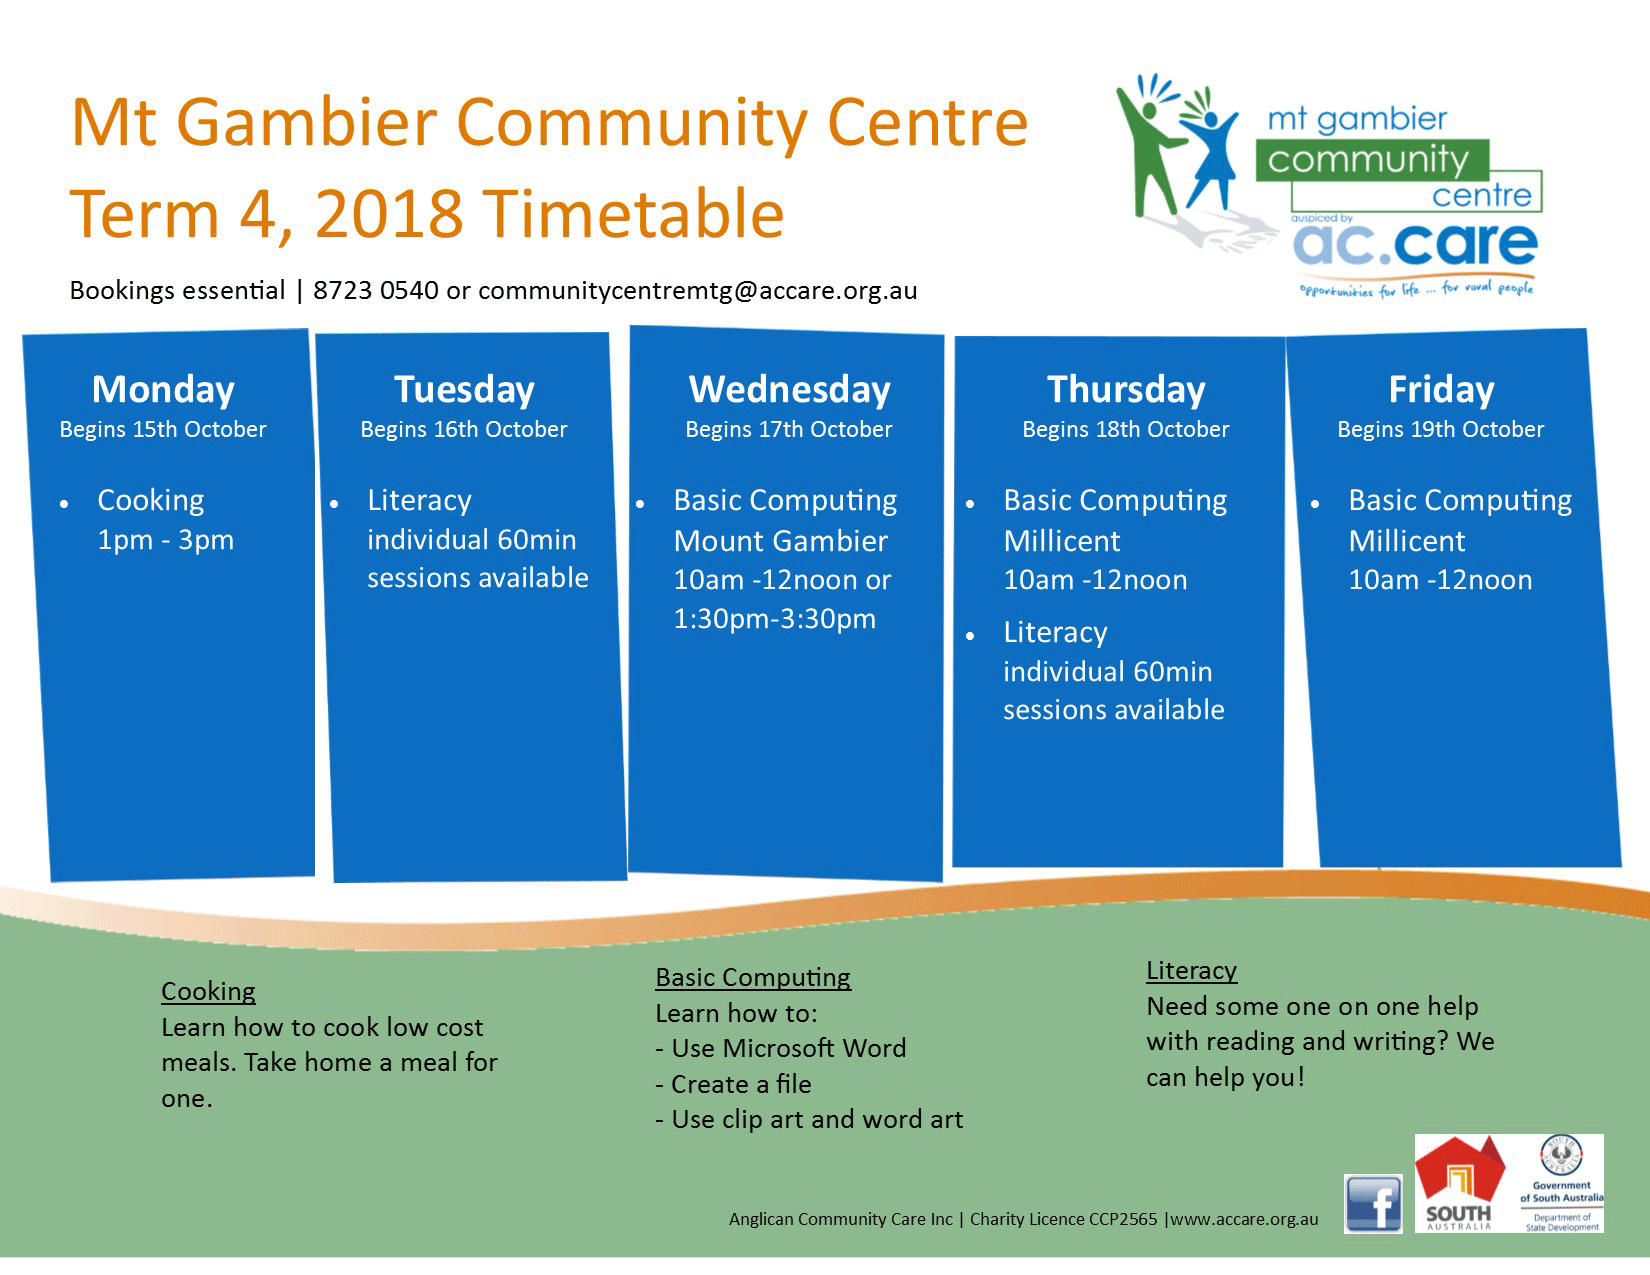 Mount Gambier Community Centre Term 4 2018 timetable